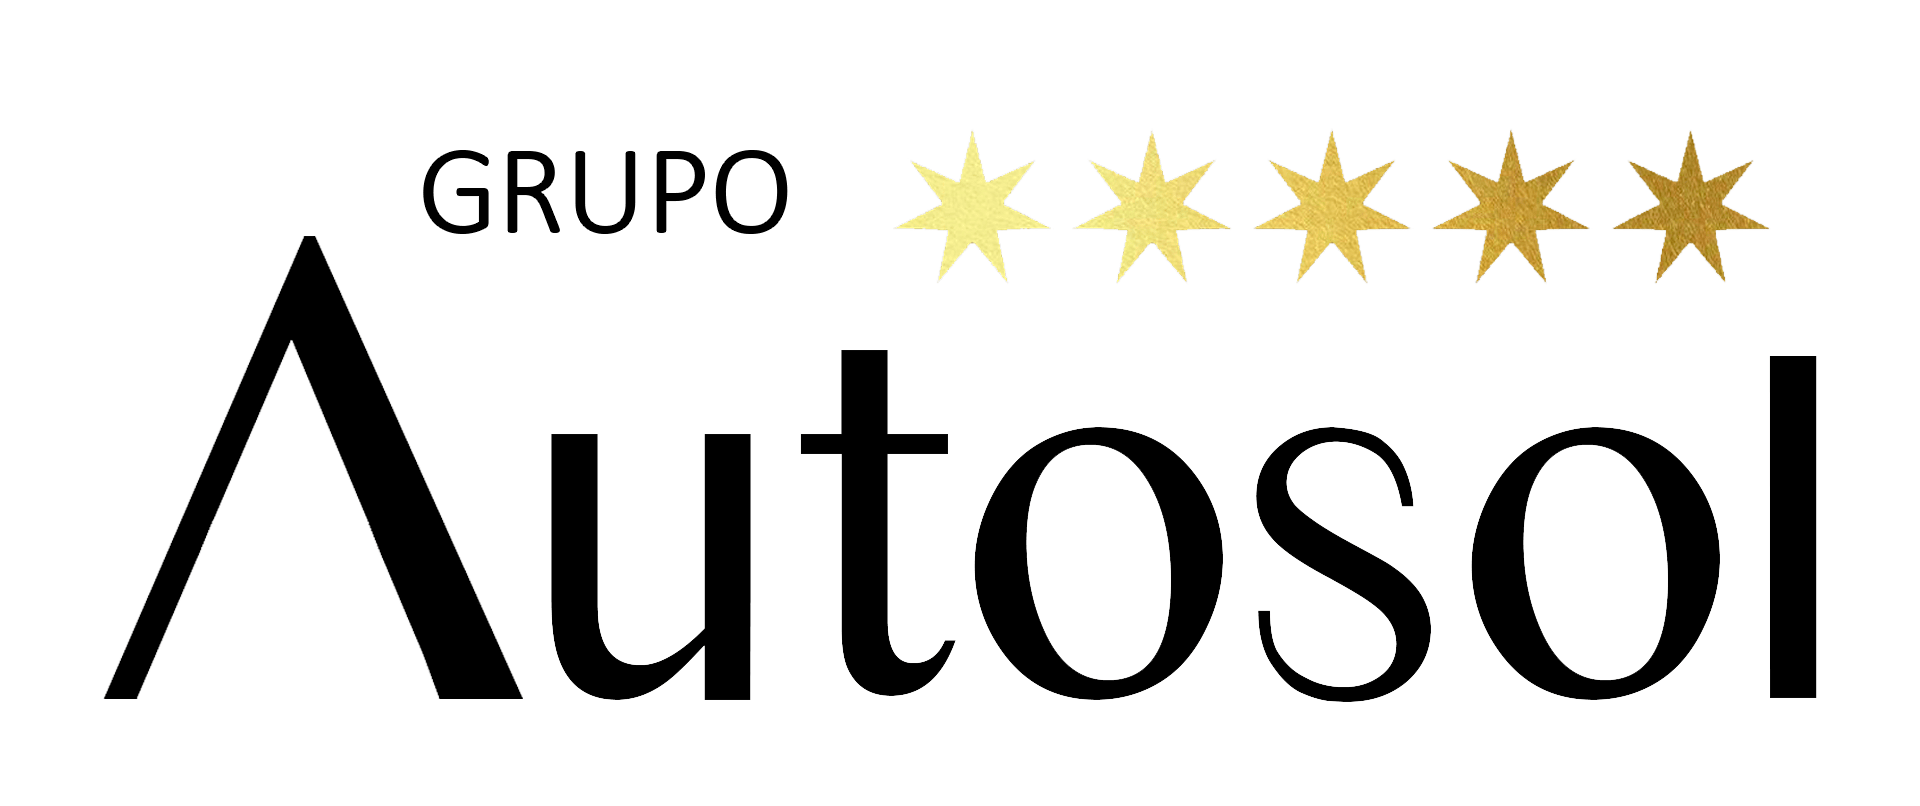 Grupo Autosol 